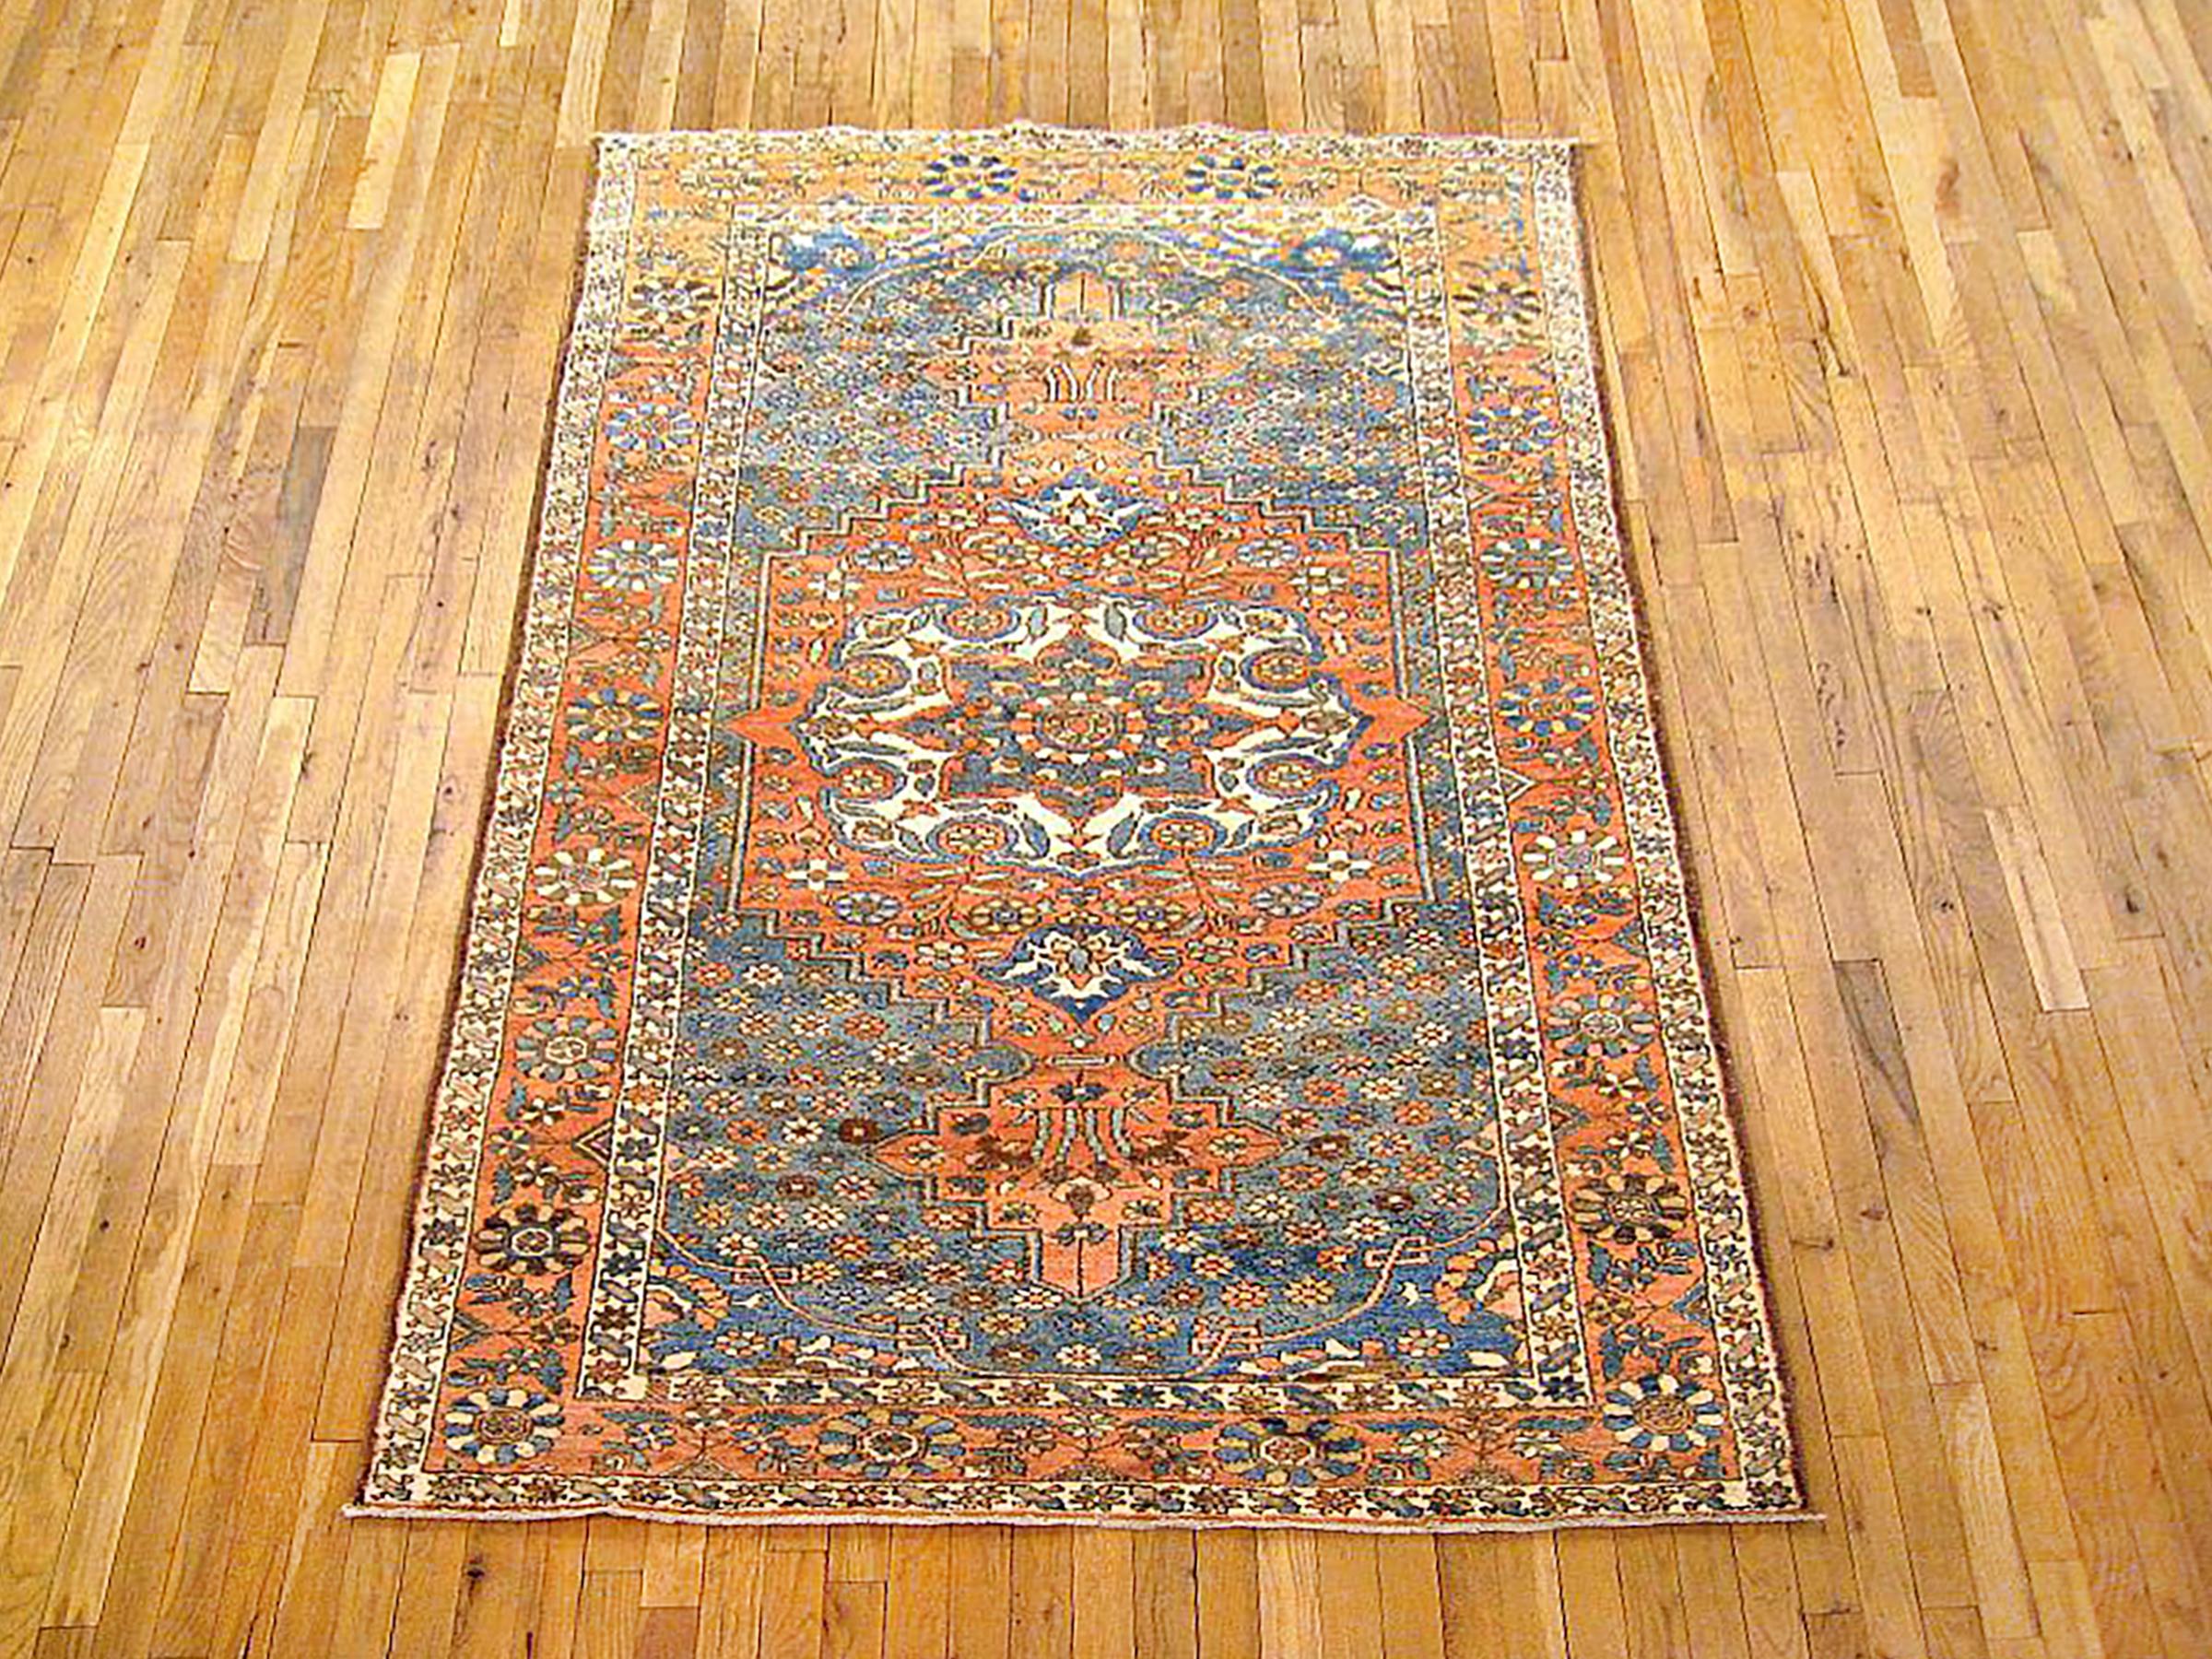 Antique Persian Baktiari Oriental rug, small size.

An antique Baktiari oriental rug, size 7'0